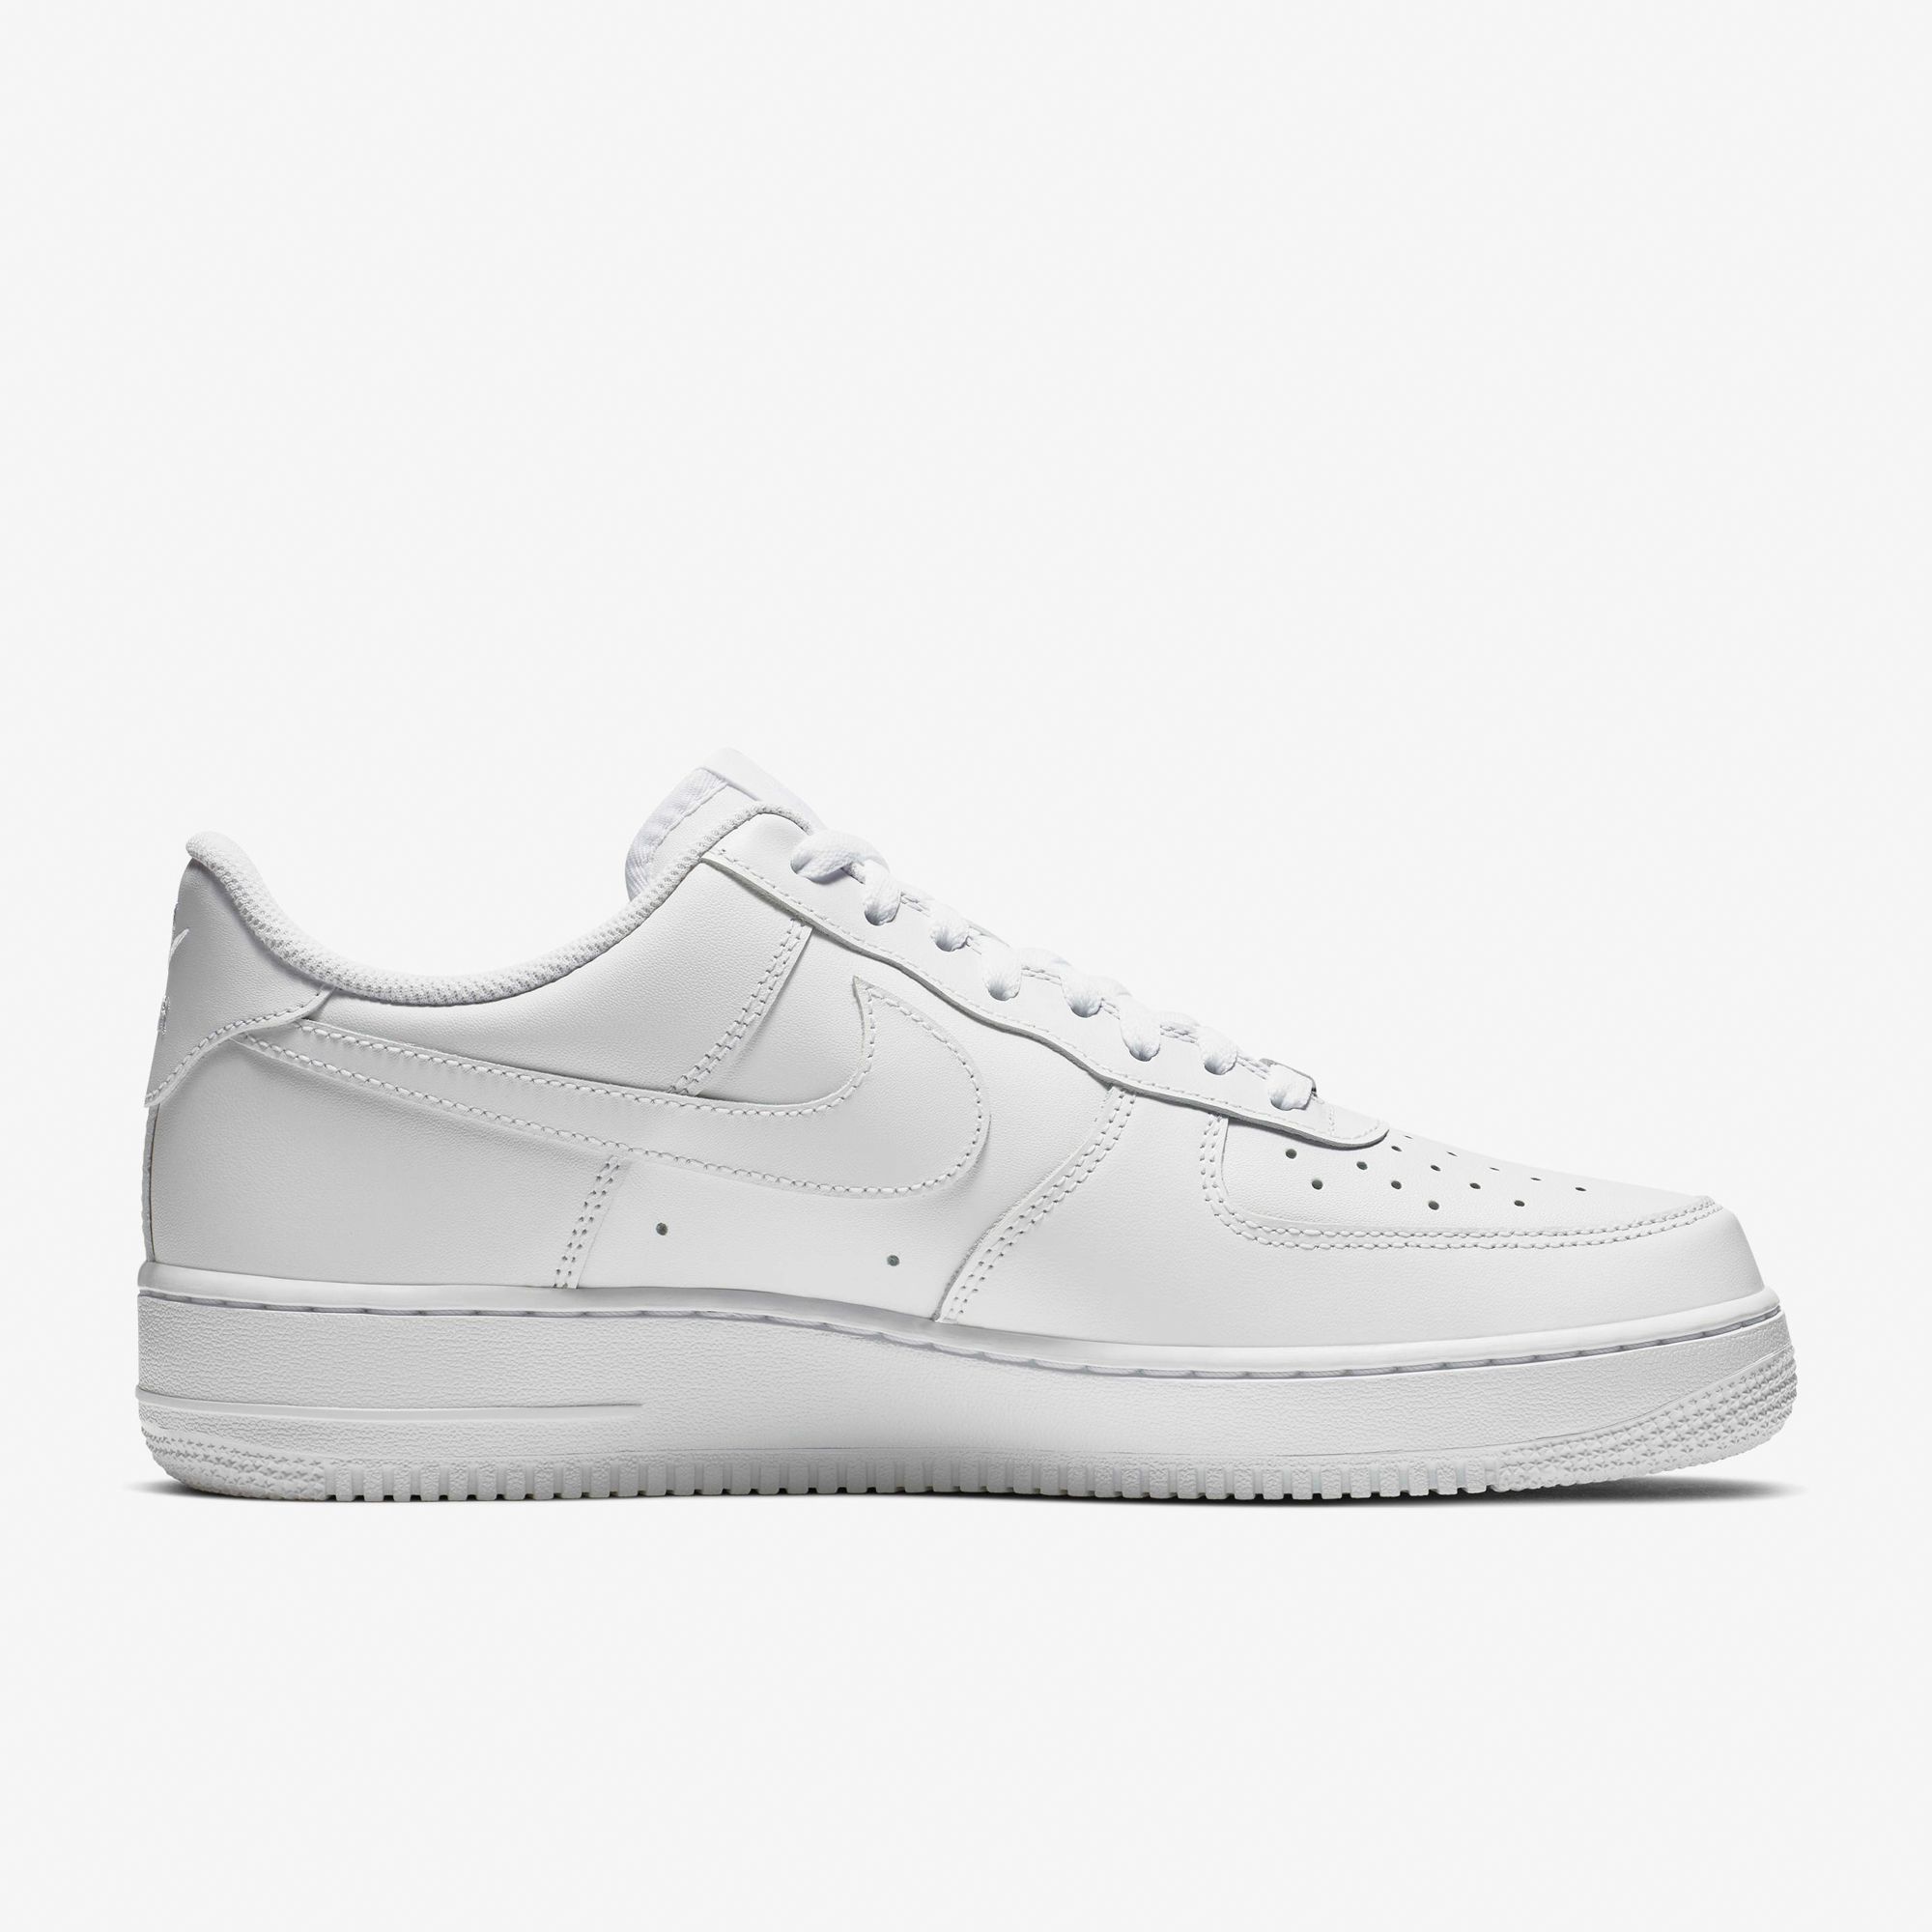  Nike Air Force 1 '07 - White / White 